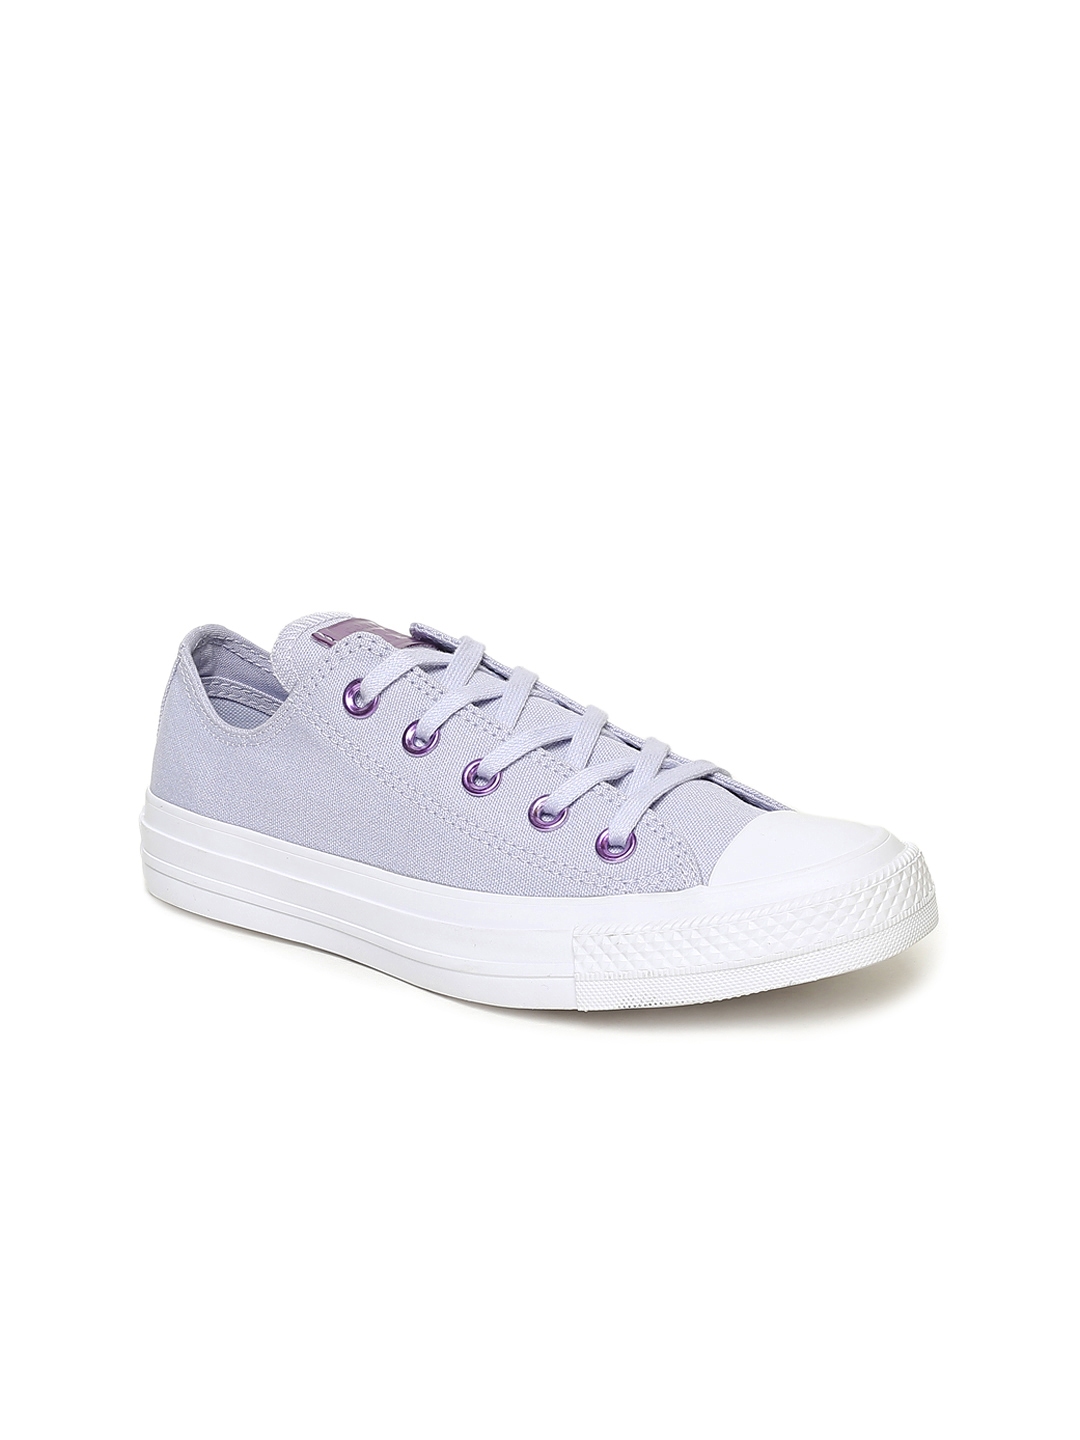 purple converse sneakers